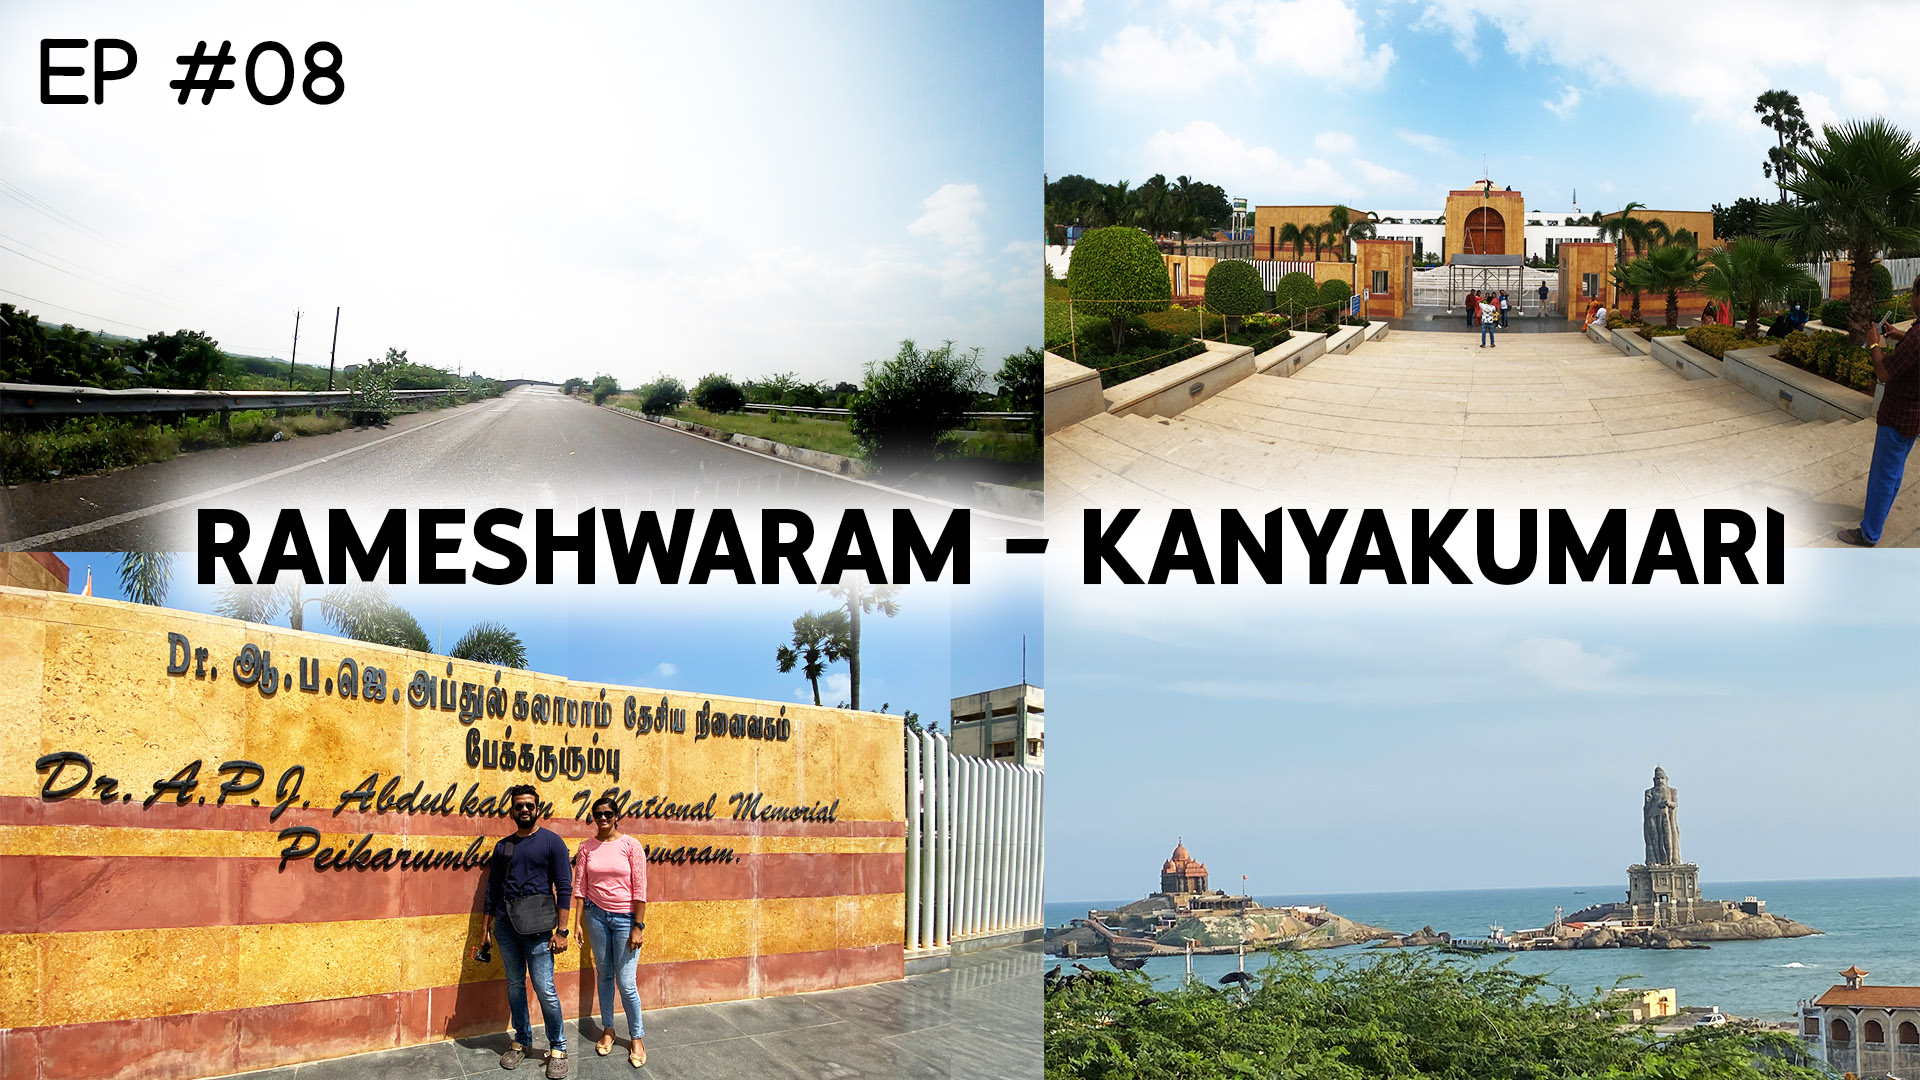 Places to visit between rameswaram and kanyakumari to rameshwaram auburn vs georgia betting line